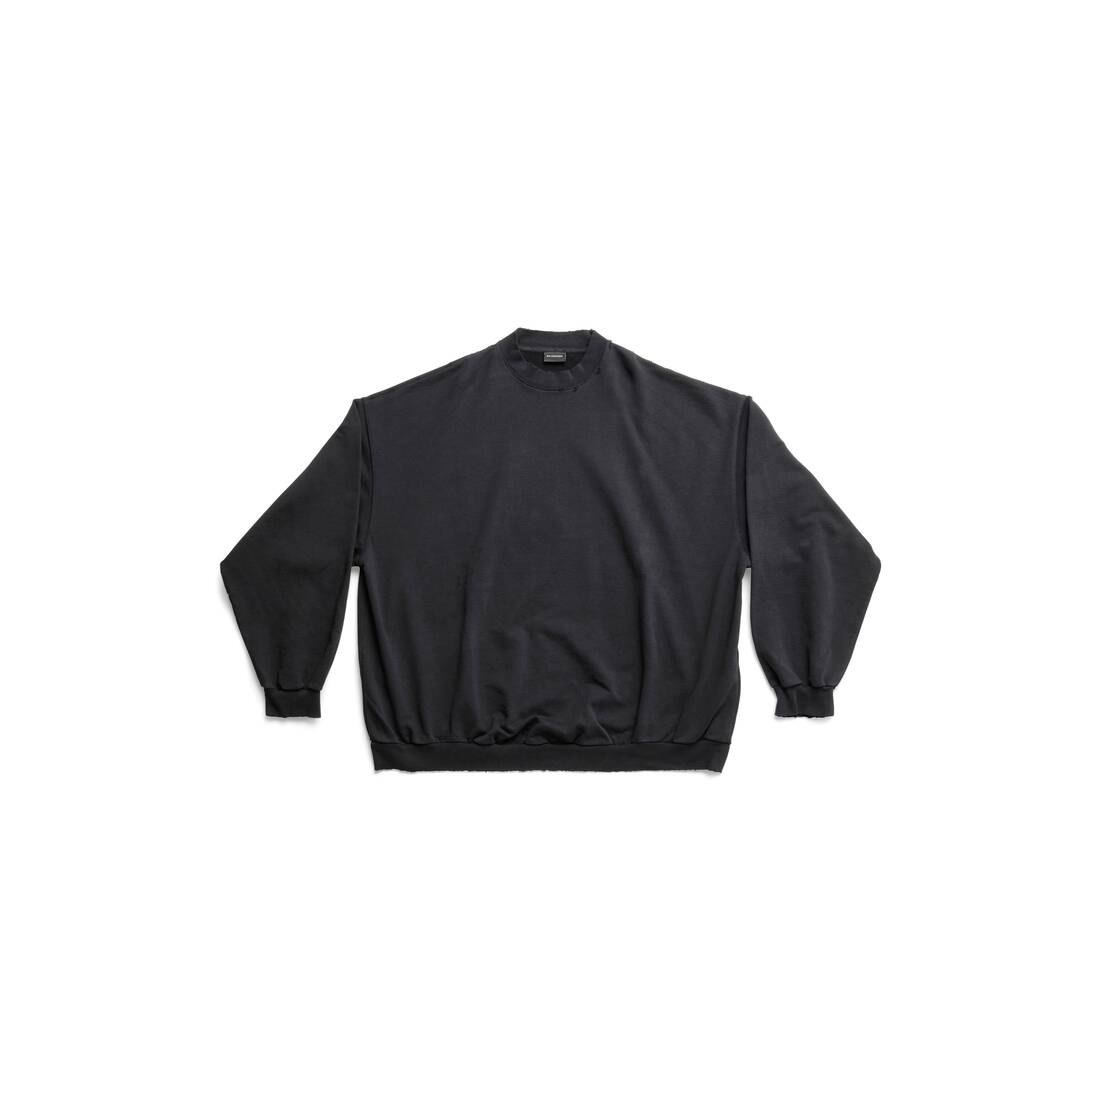 Balenciaga Black Oversized Sweatshirt